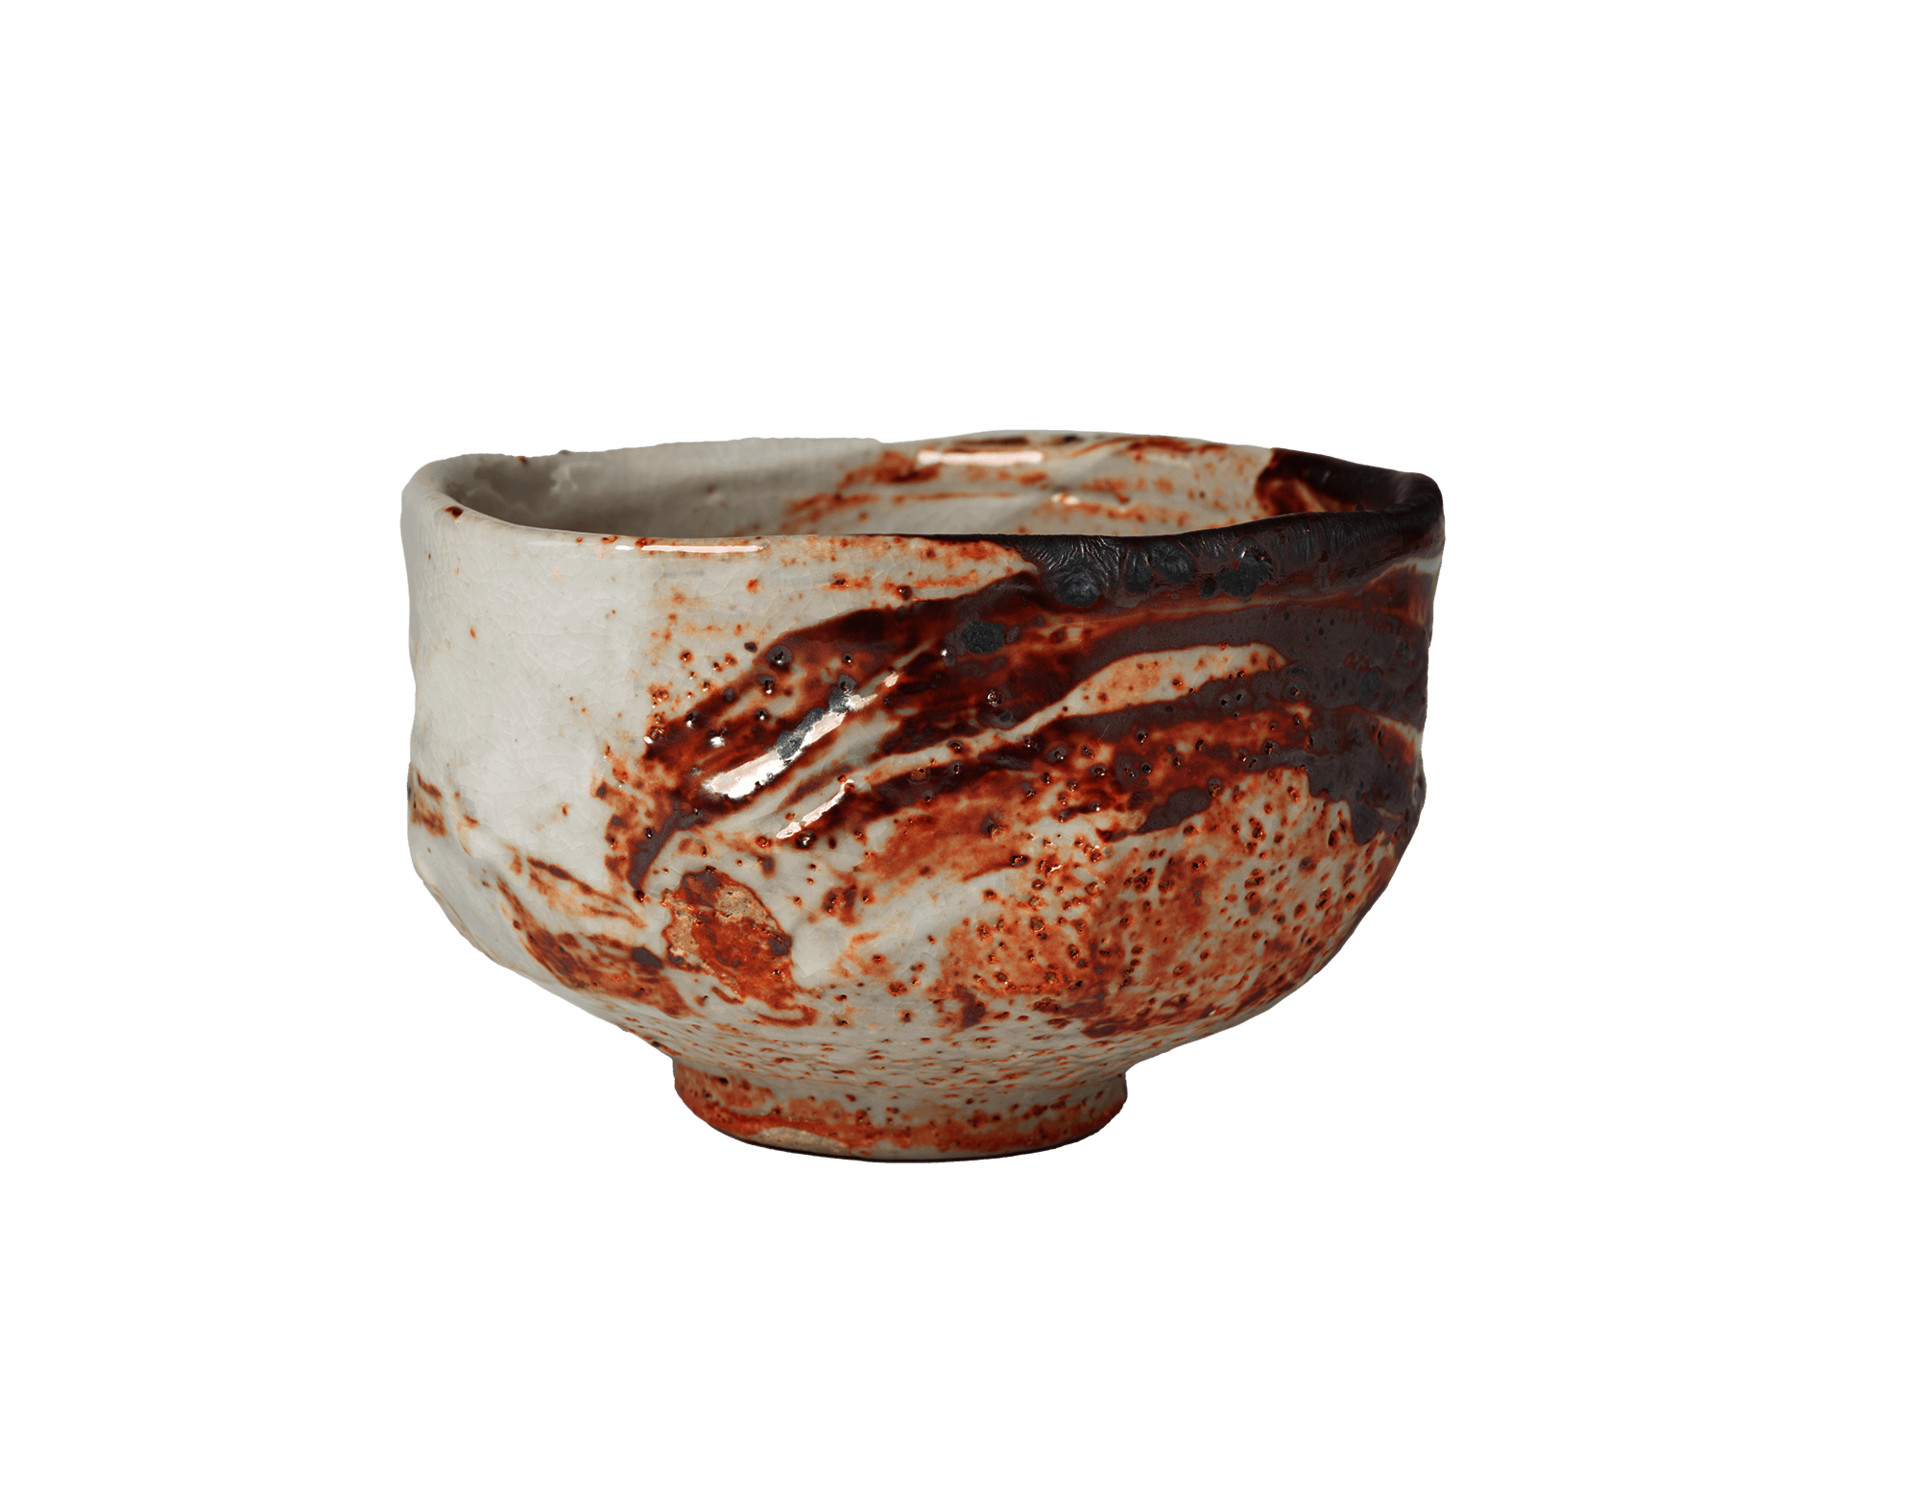 Ceramic tea bowl with white and dark red glaze